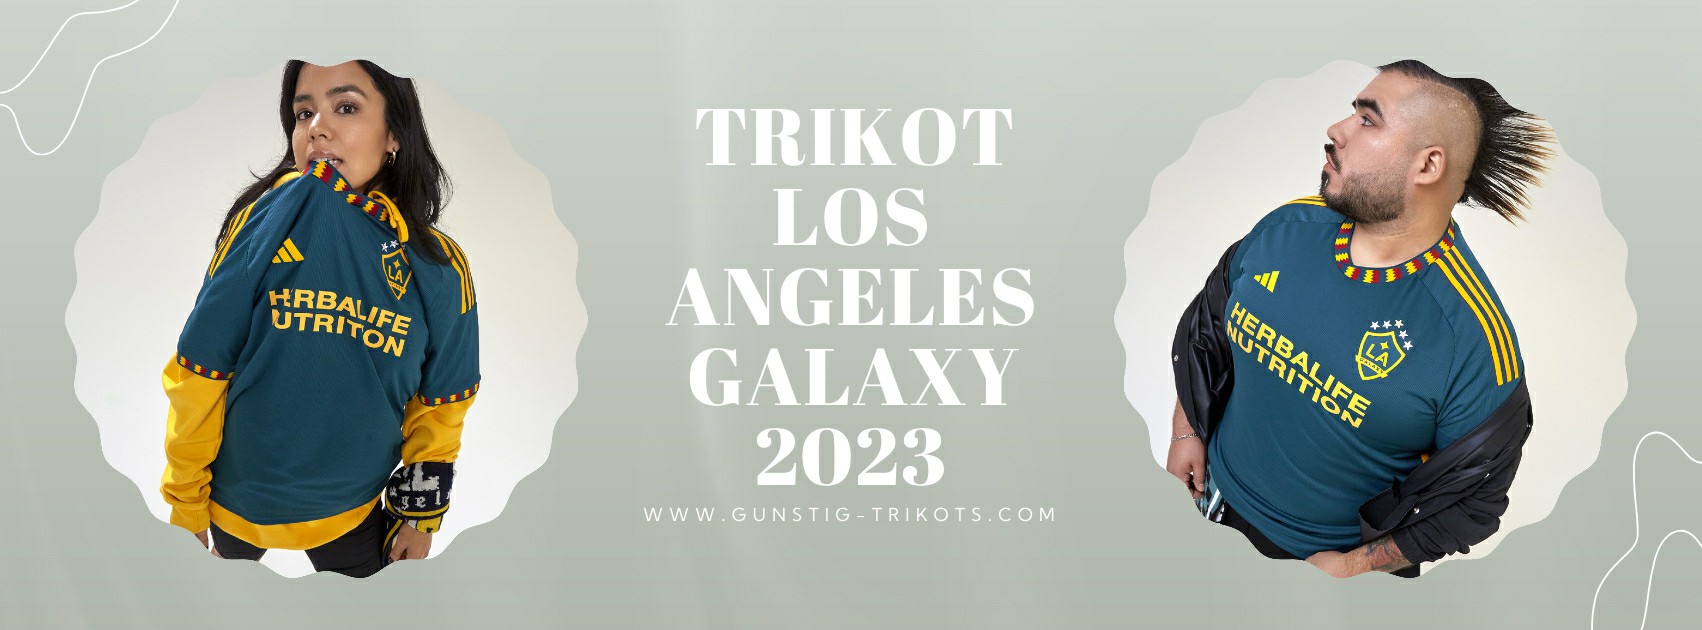 Los Angeles Galaxy Trikot 2023-2024